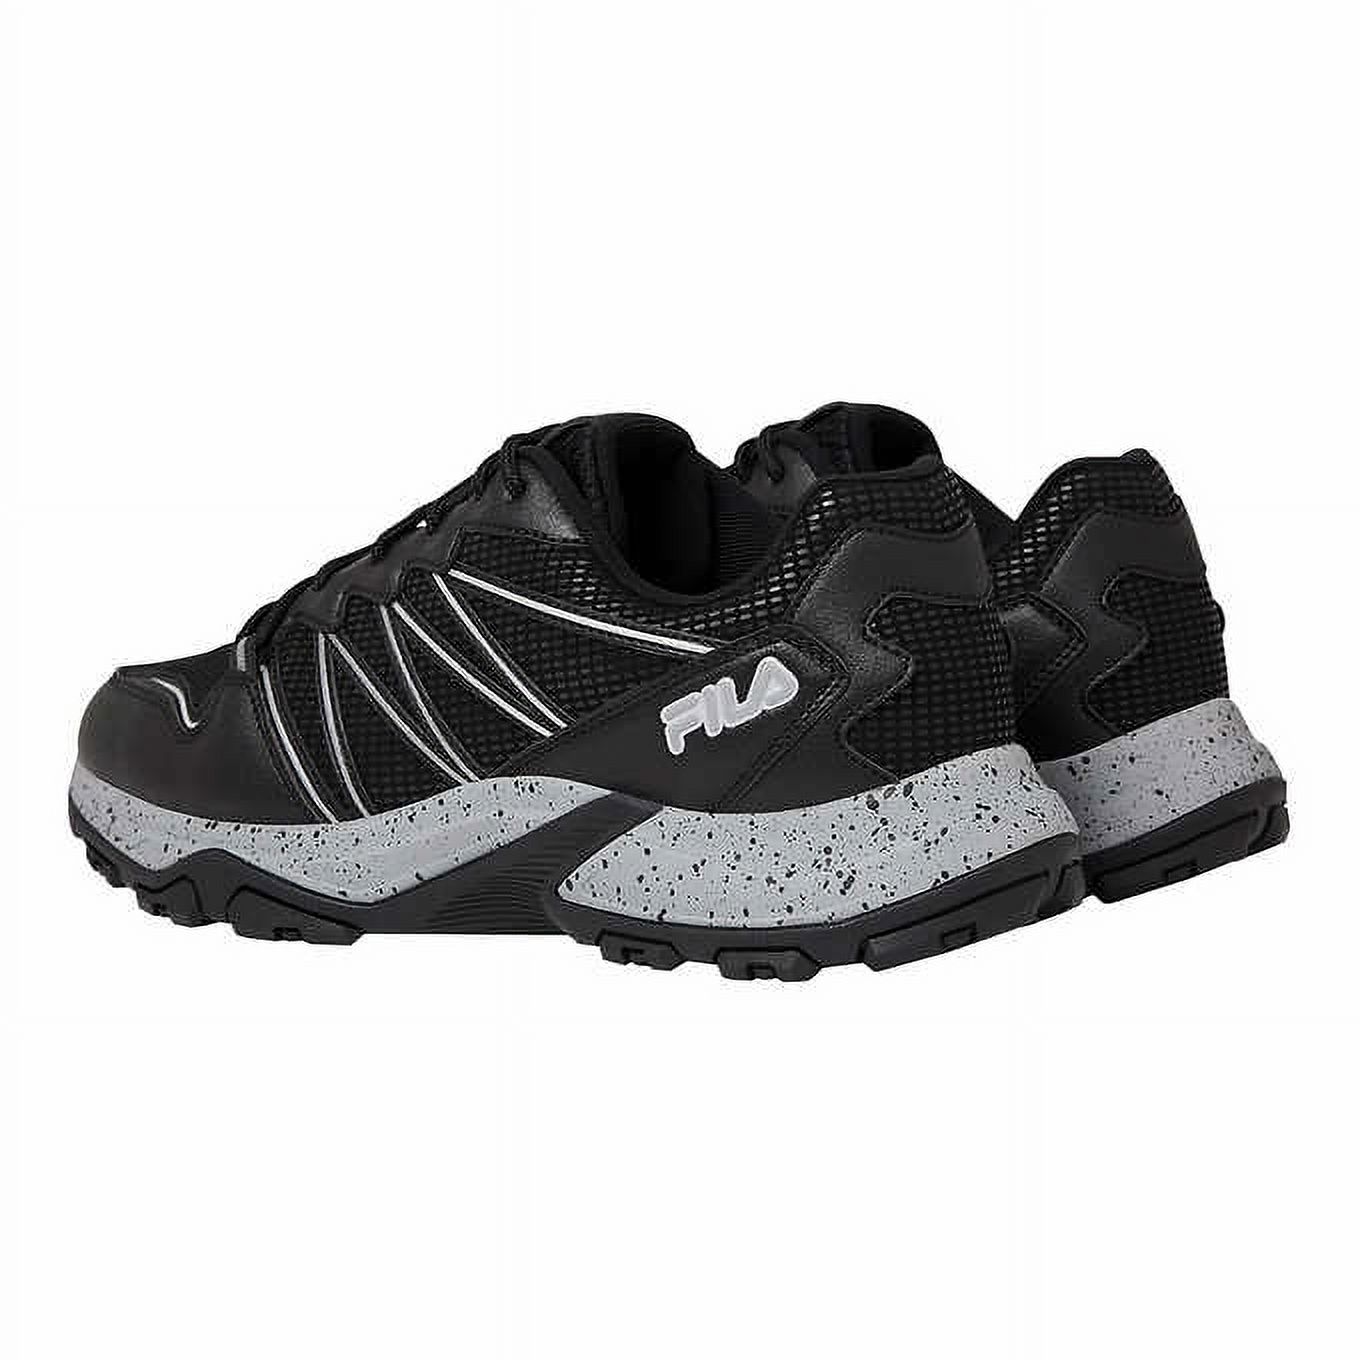 Fila Men's Quadrix Trail Running Shoes Sneakers, Black, Sz 8 - image 3 of 5